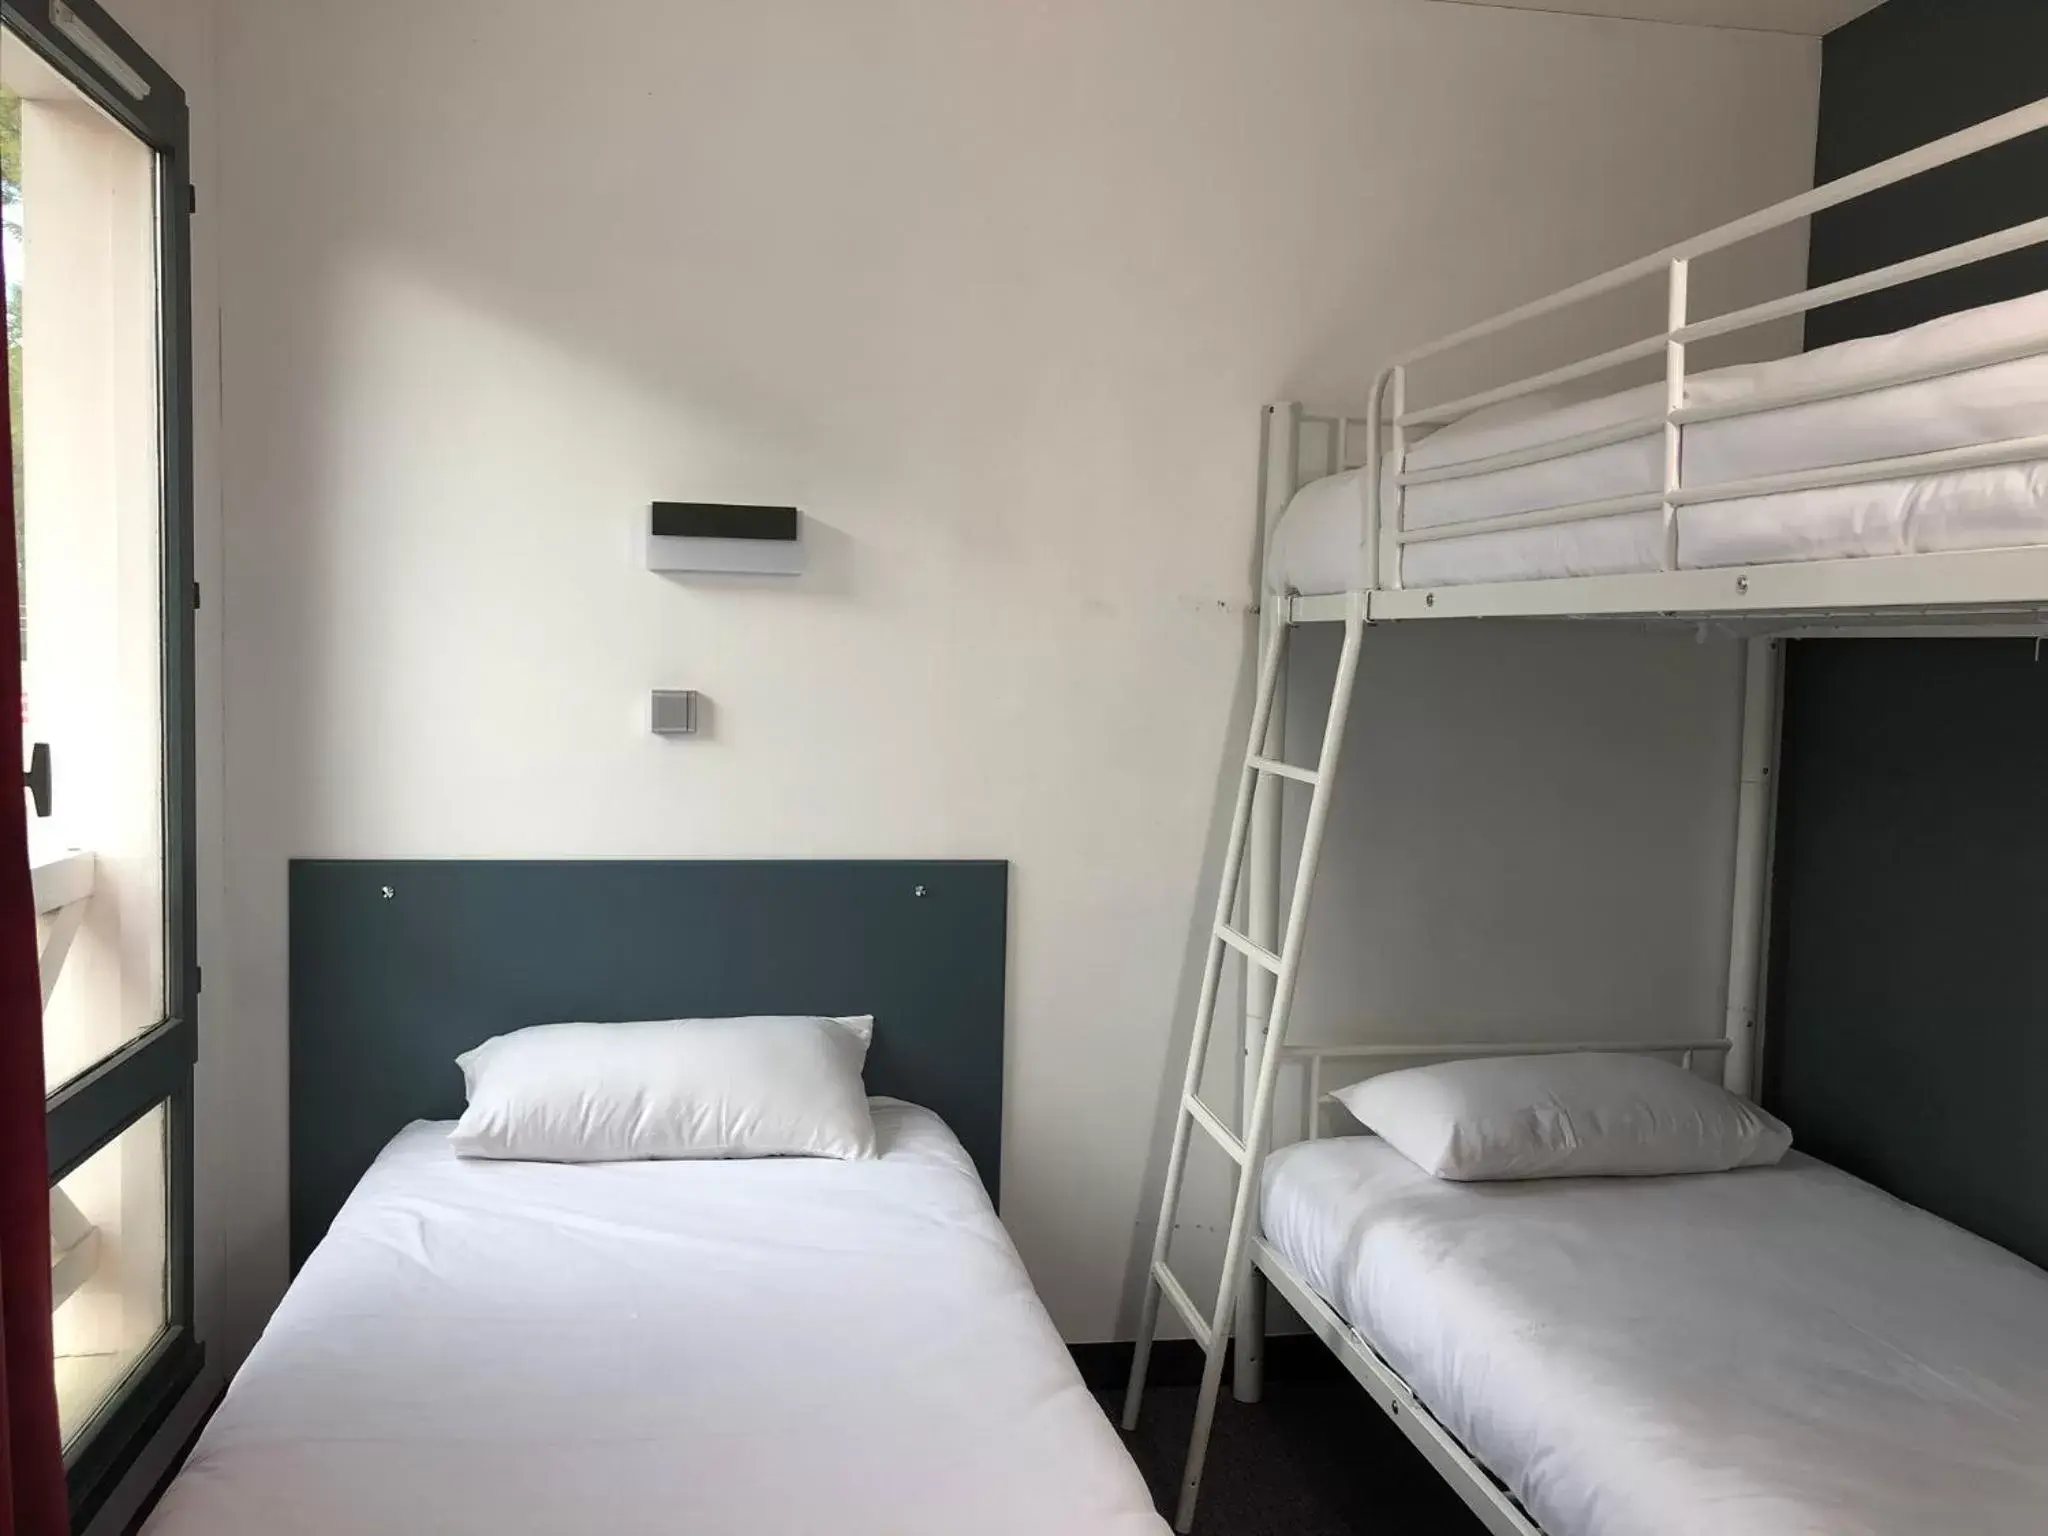 Bunk Bed in HALT HOTEL - Choisissez l'Hôtellerie Indépendante